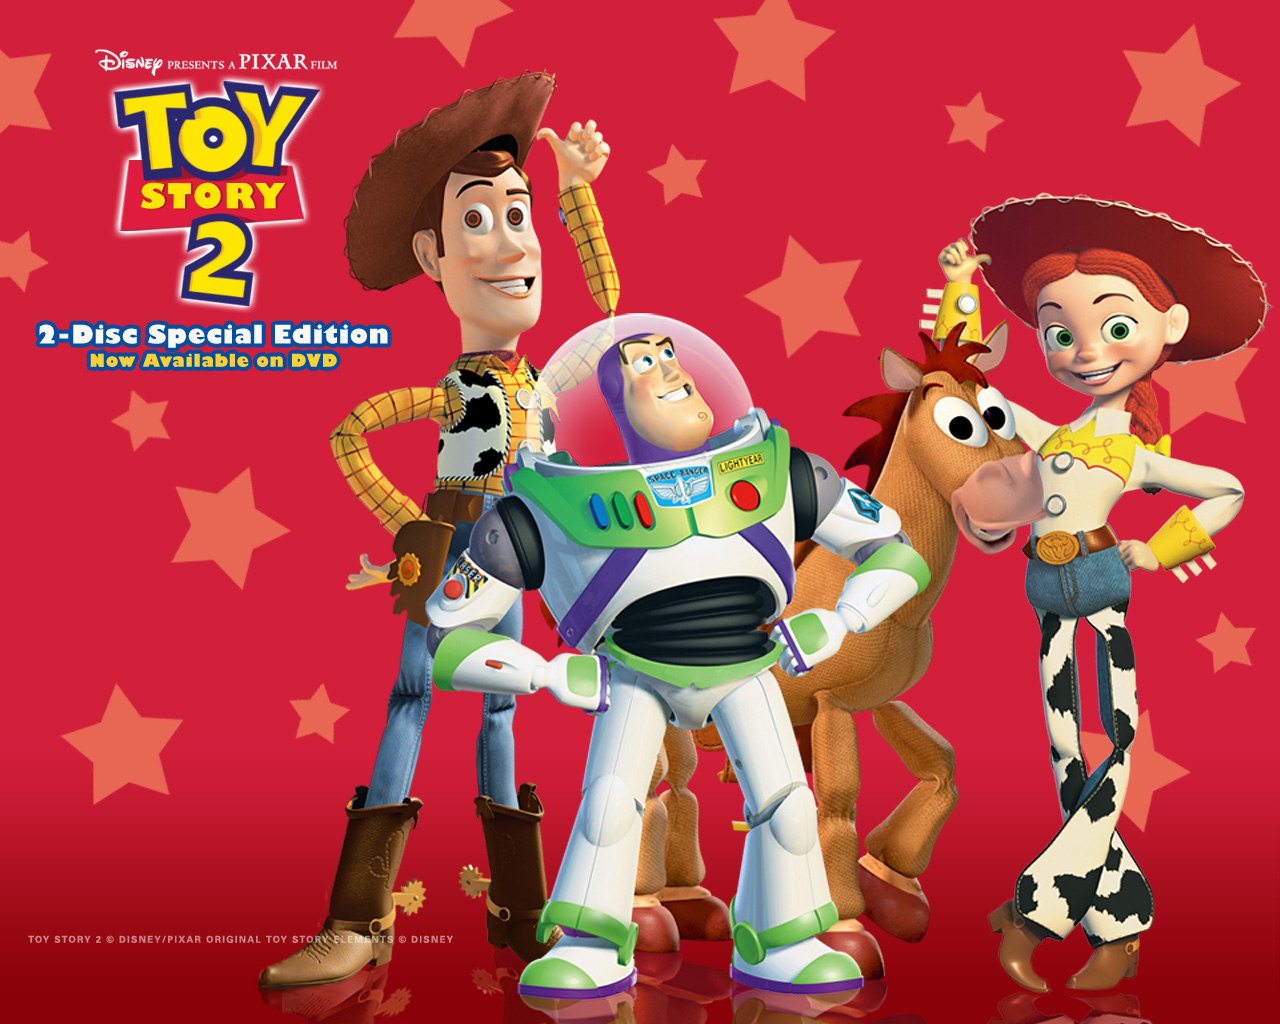 Toy Story 2 - Toy Story 2 Wallpaper (36440636) - Fanpop